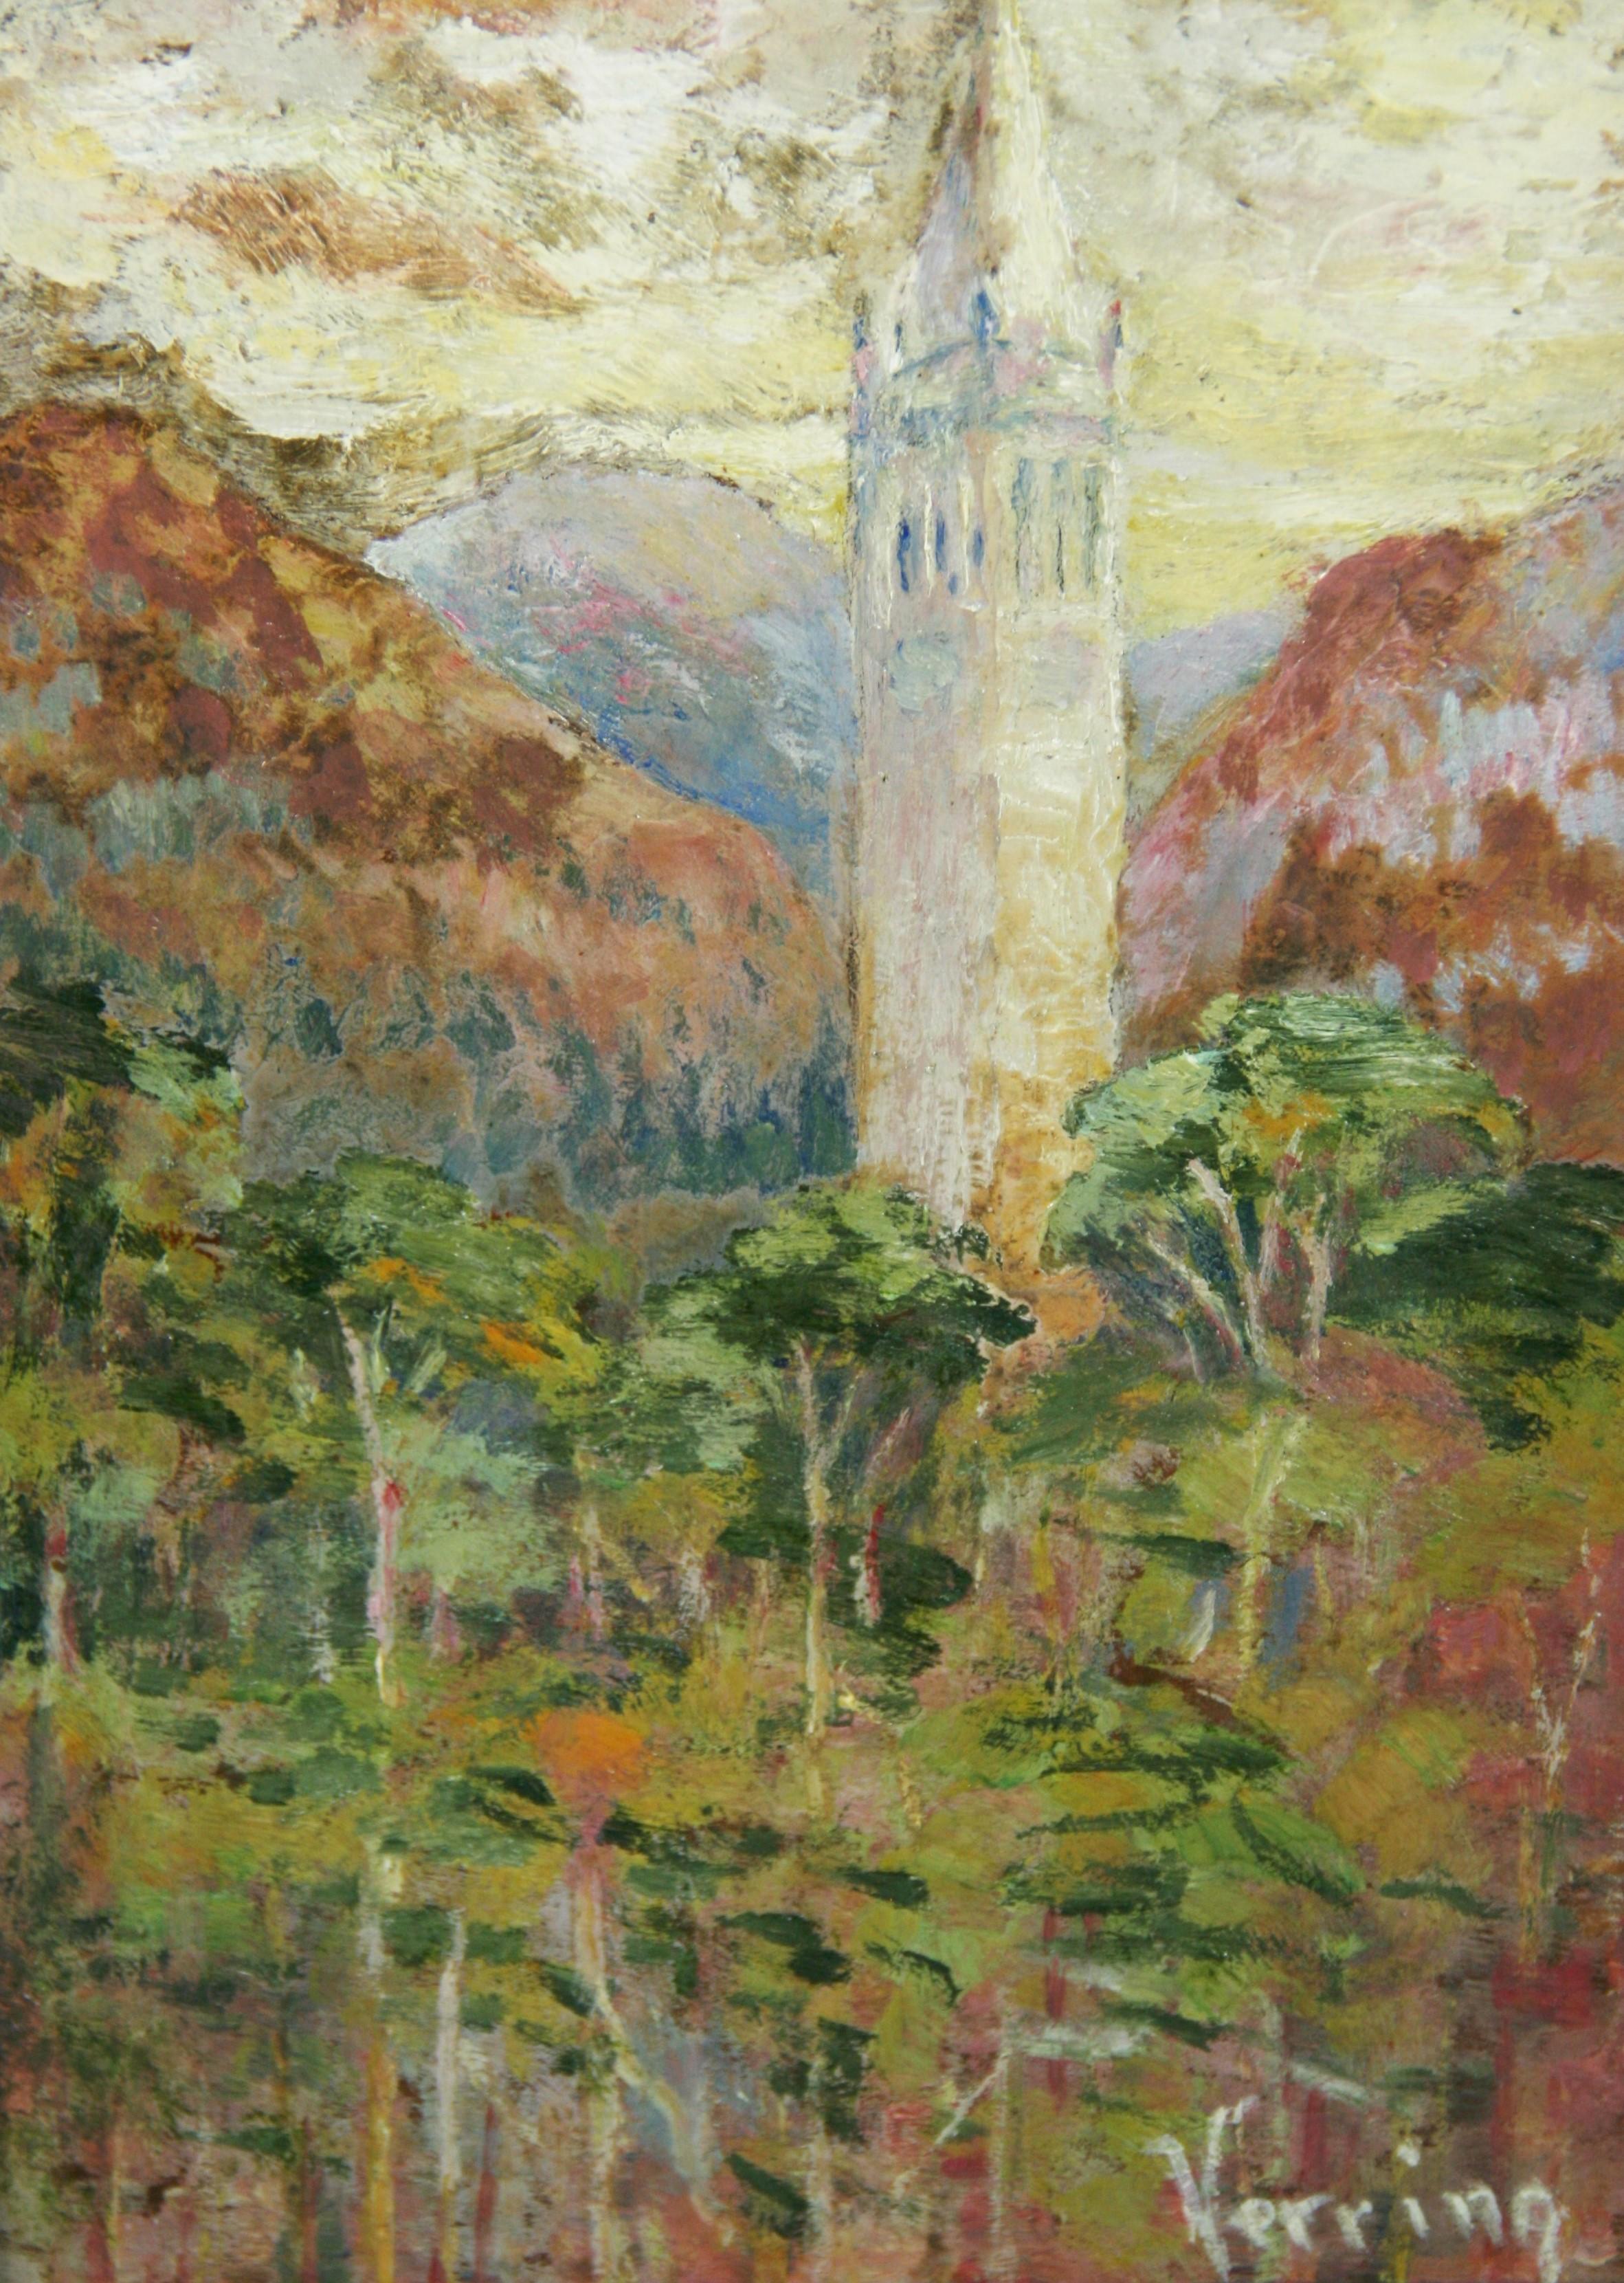 3956  French Impressionist landscape on artist board set in a gilt wood frame
Image size 11.5x7.75